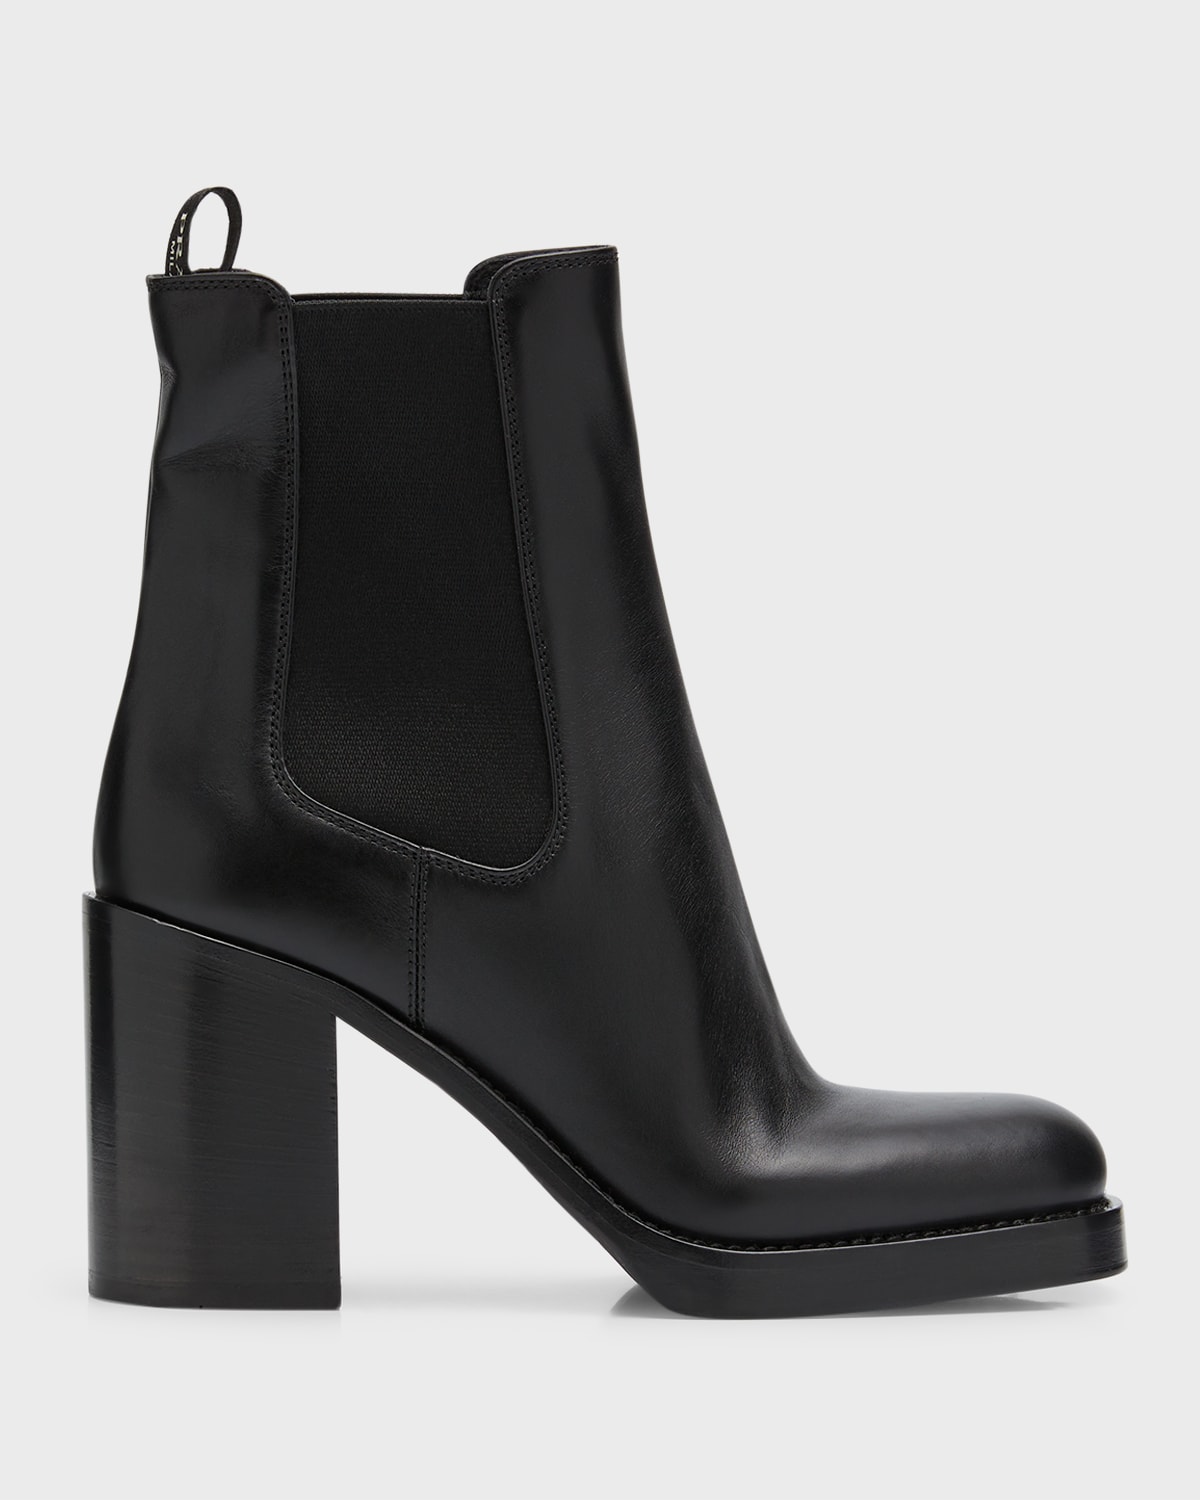 Designer Boots for Women | Neiman Marcus